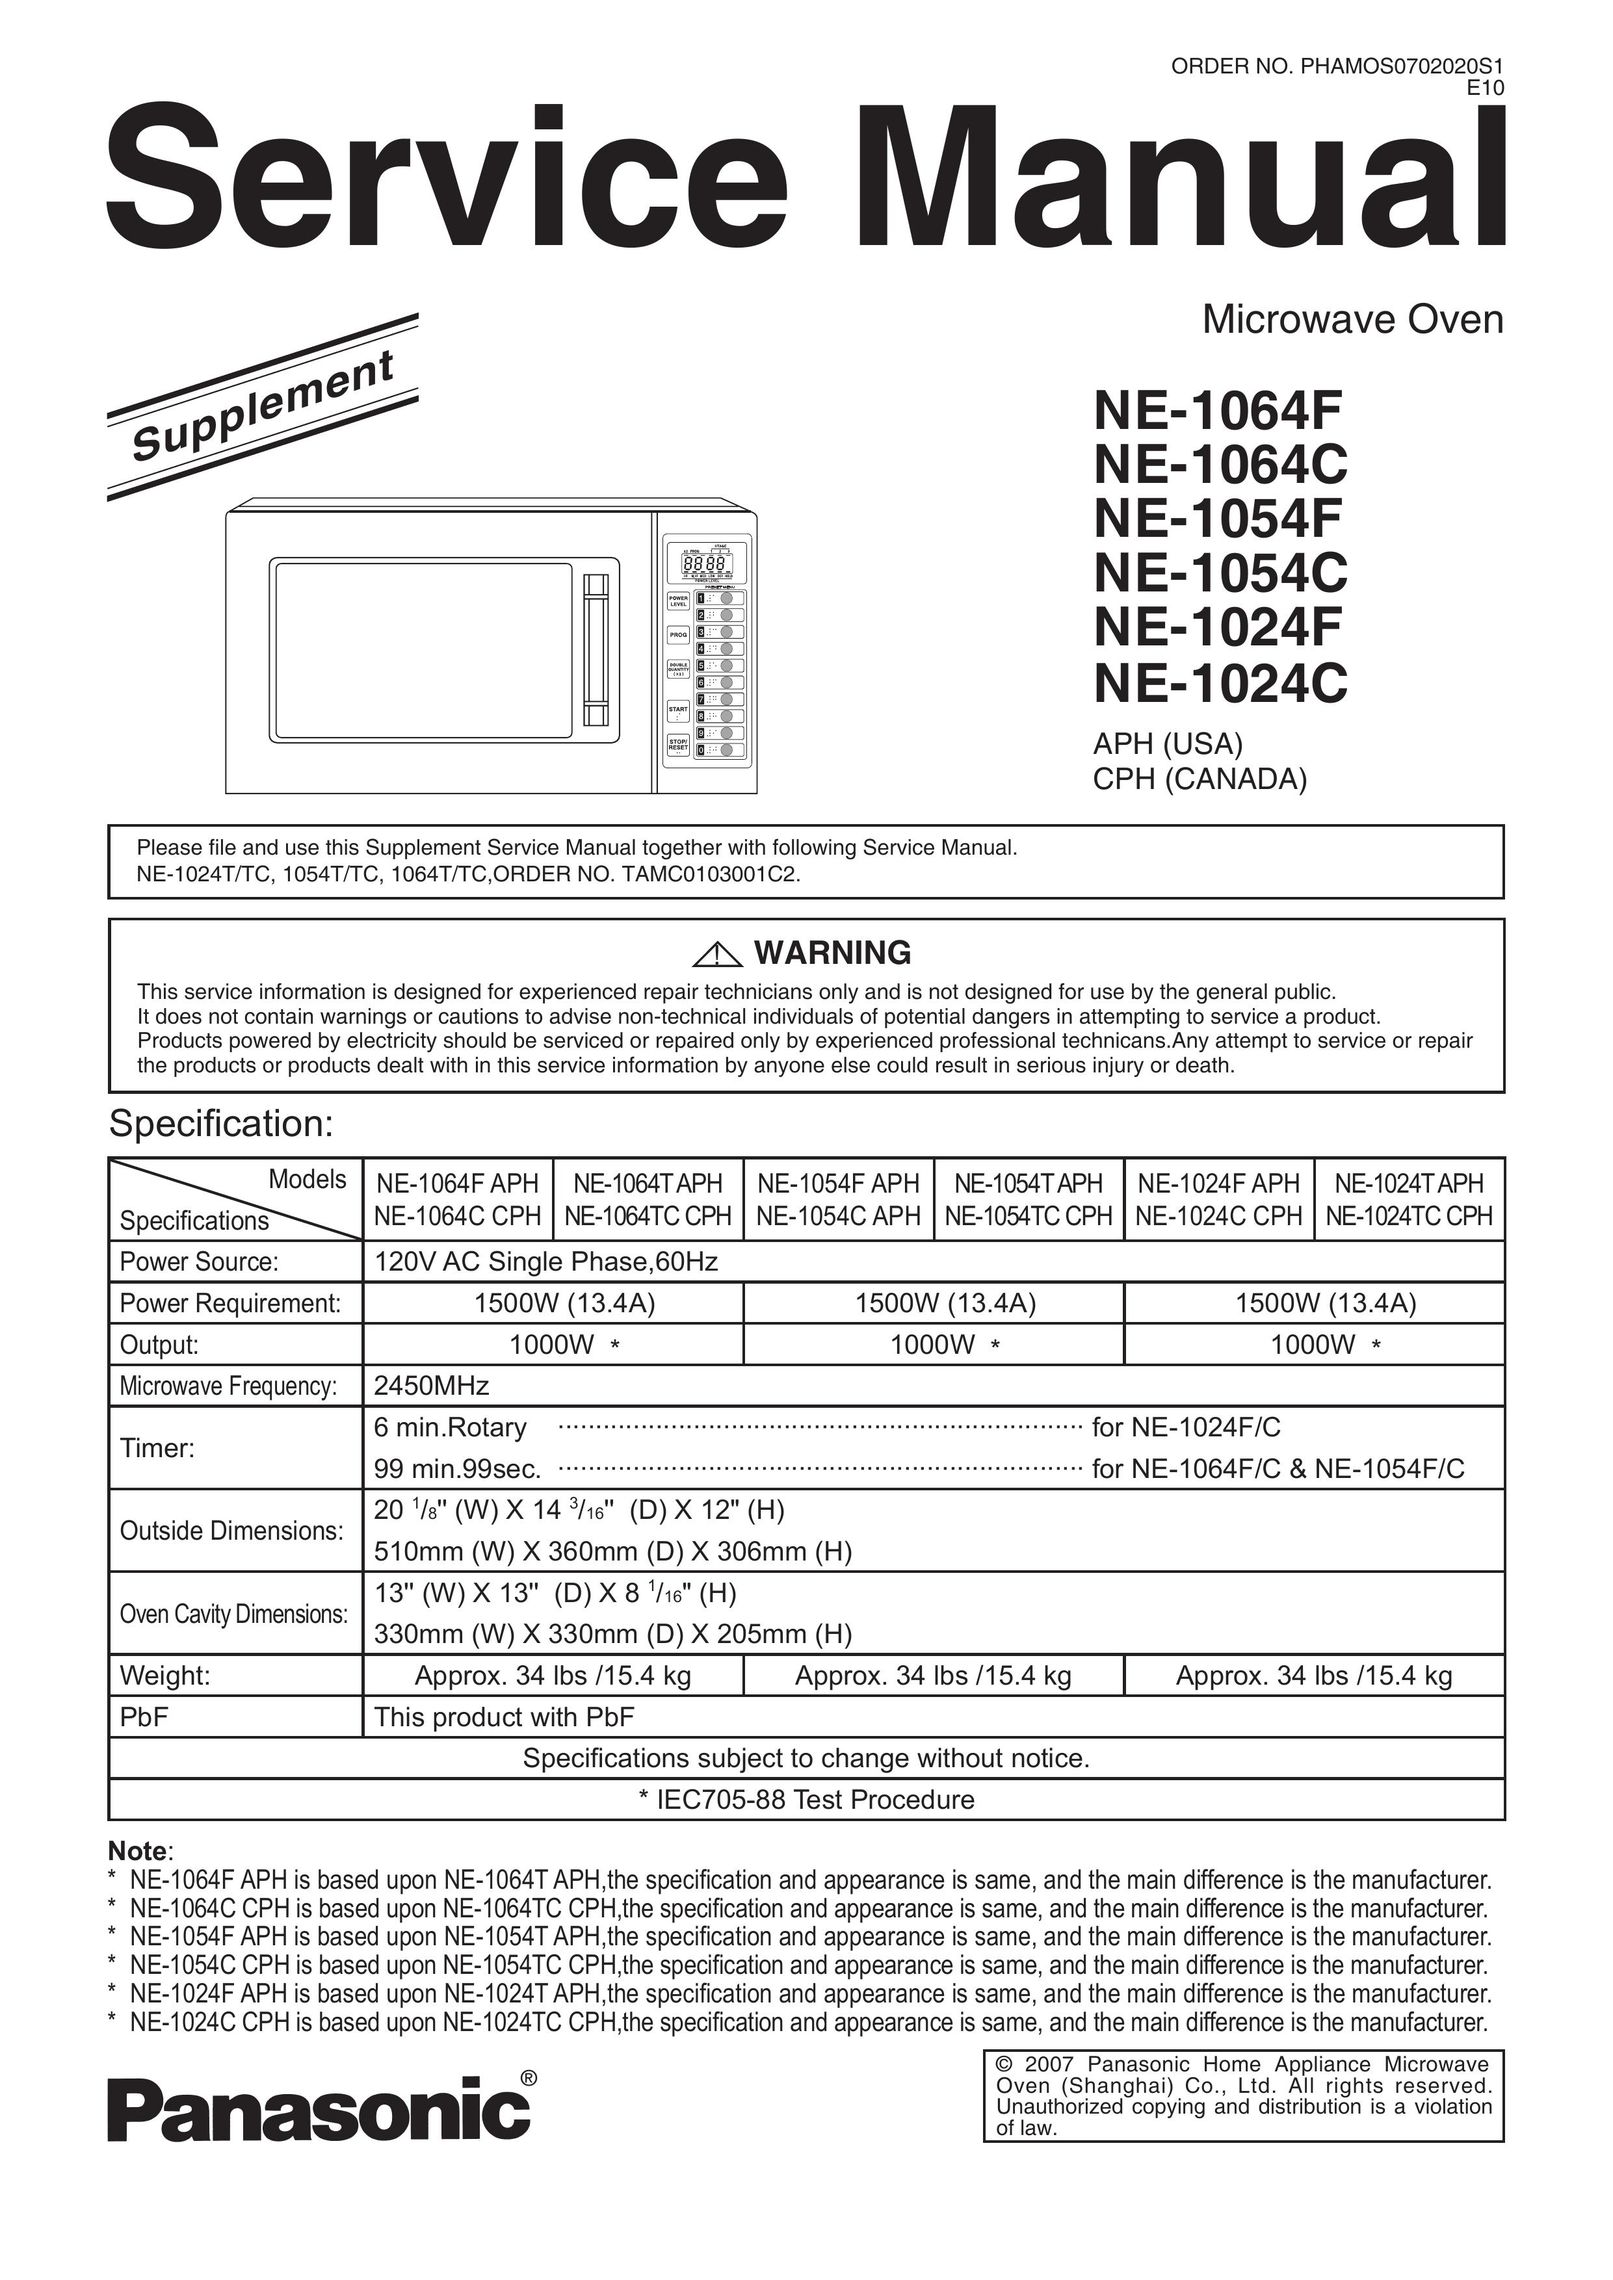 Panasonic NE-1064C Microwave Oven User Manual